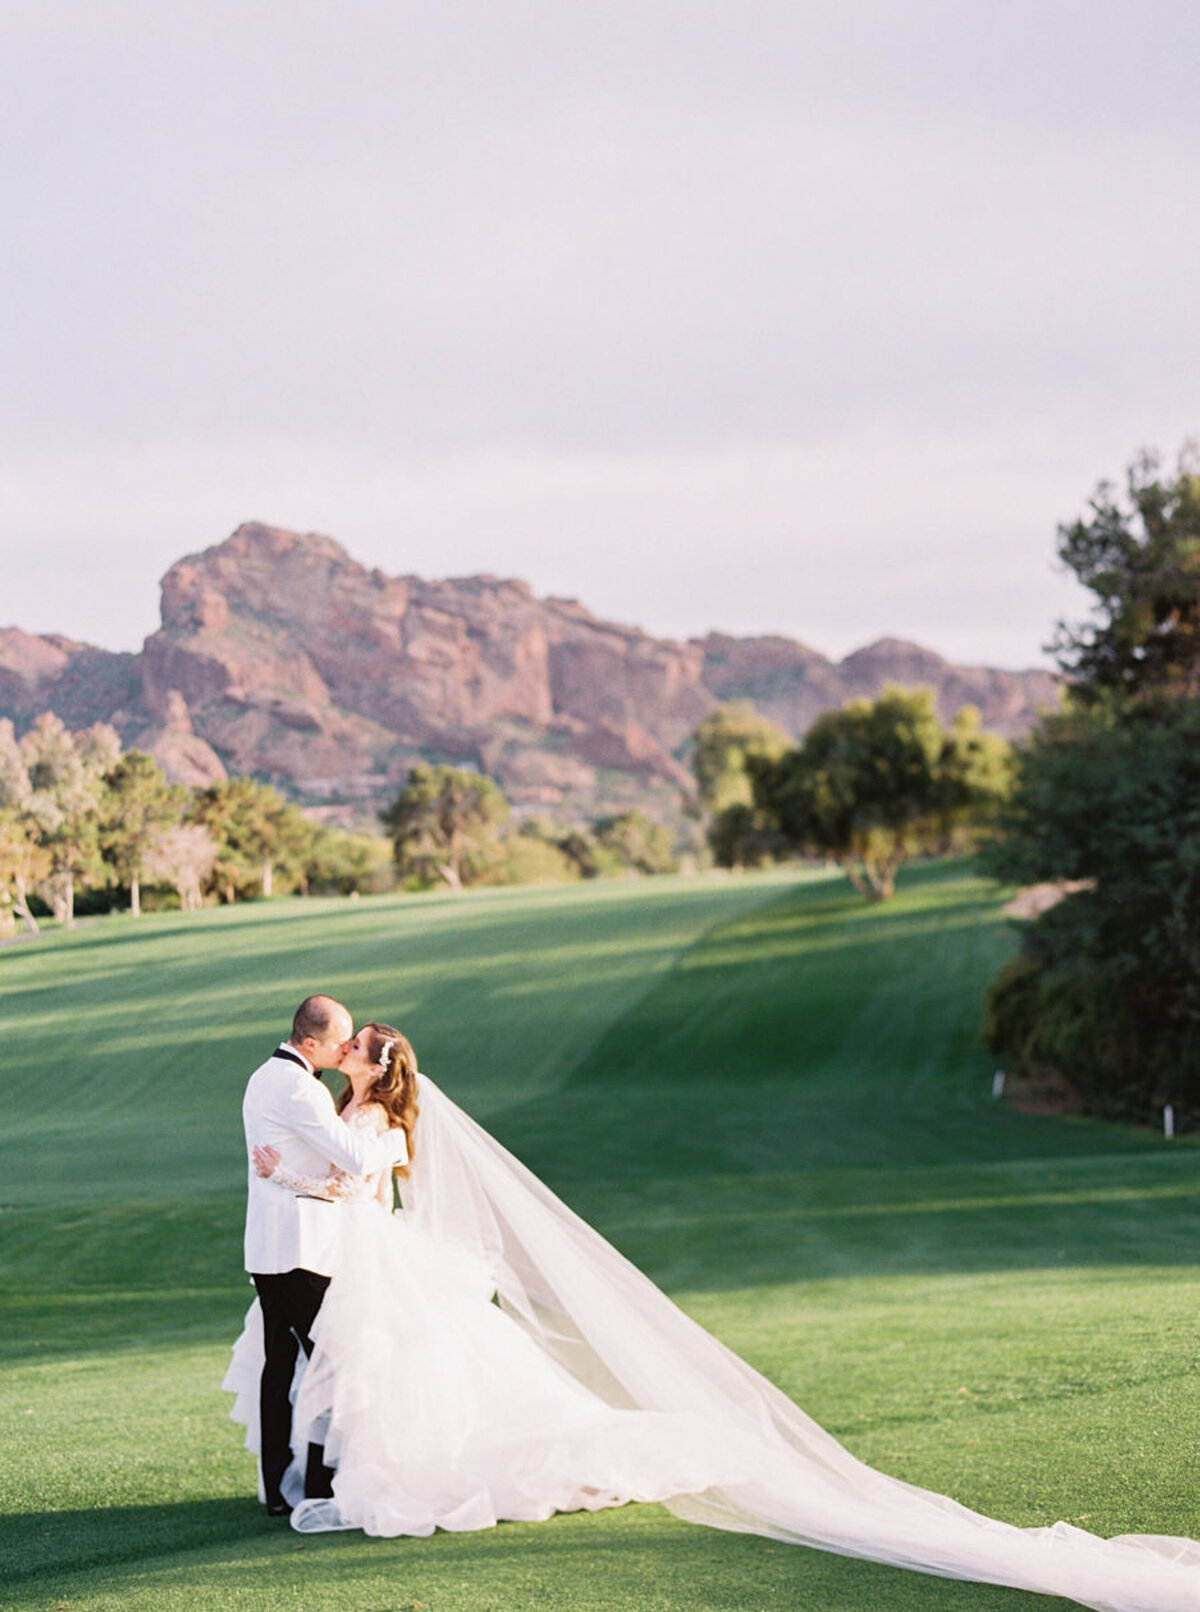 Alexandria & Stephen | Paradise Valley Country Club, Arizona | Mary Claire Photography | Arizona & Destination Fine Art Wedding Photographer